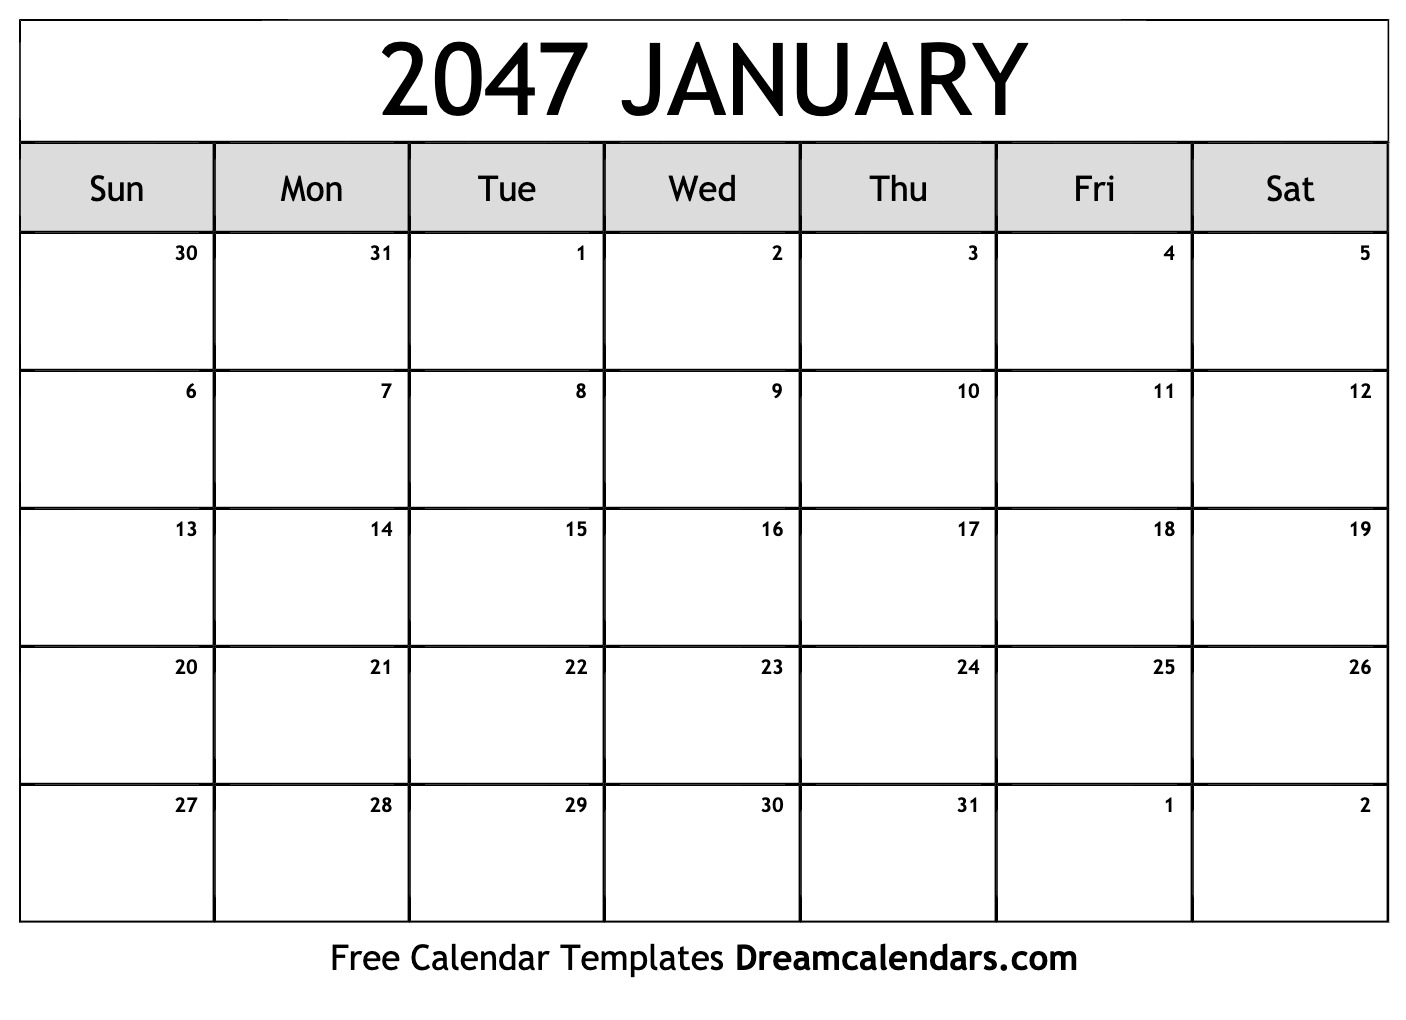 january-2047-calendar-free-blank-printable-templates